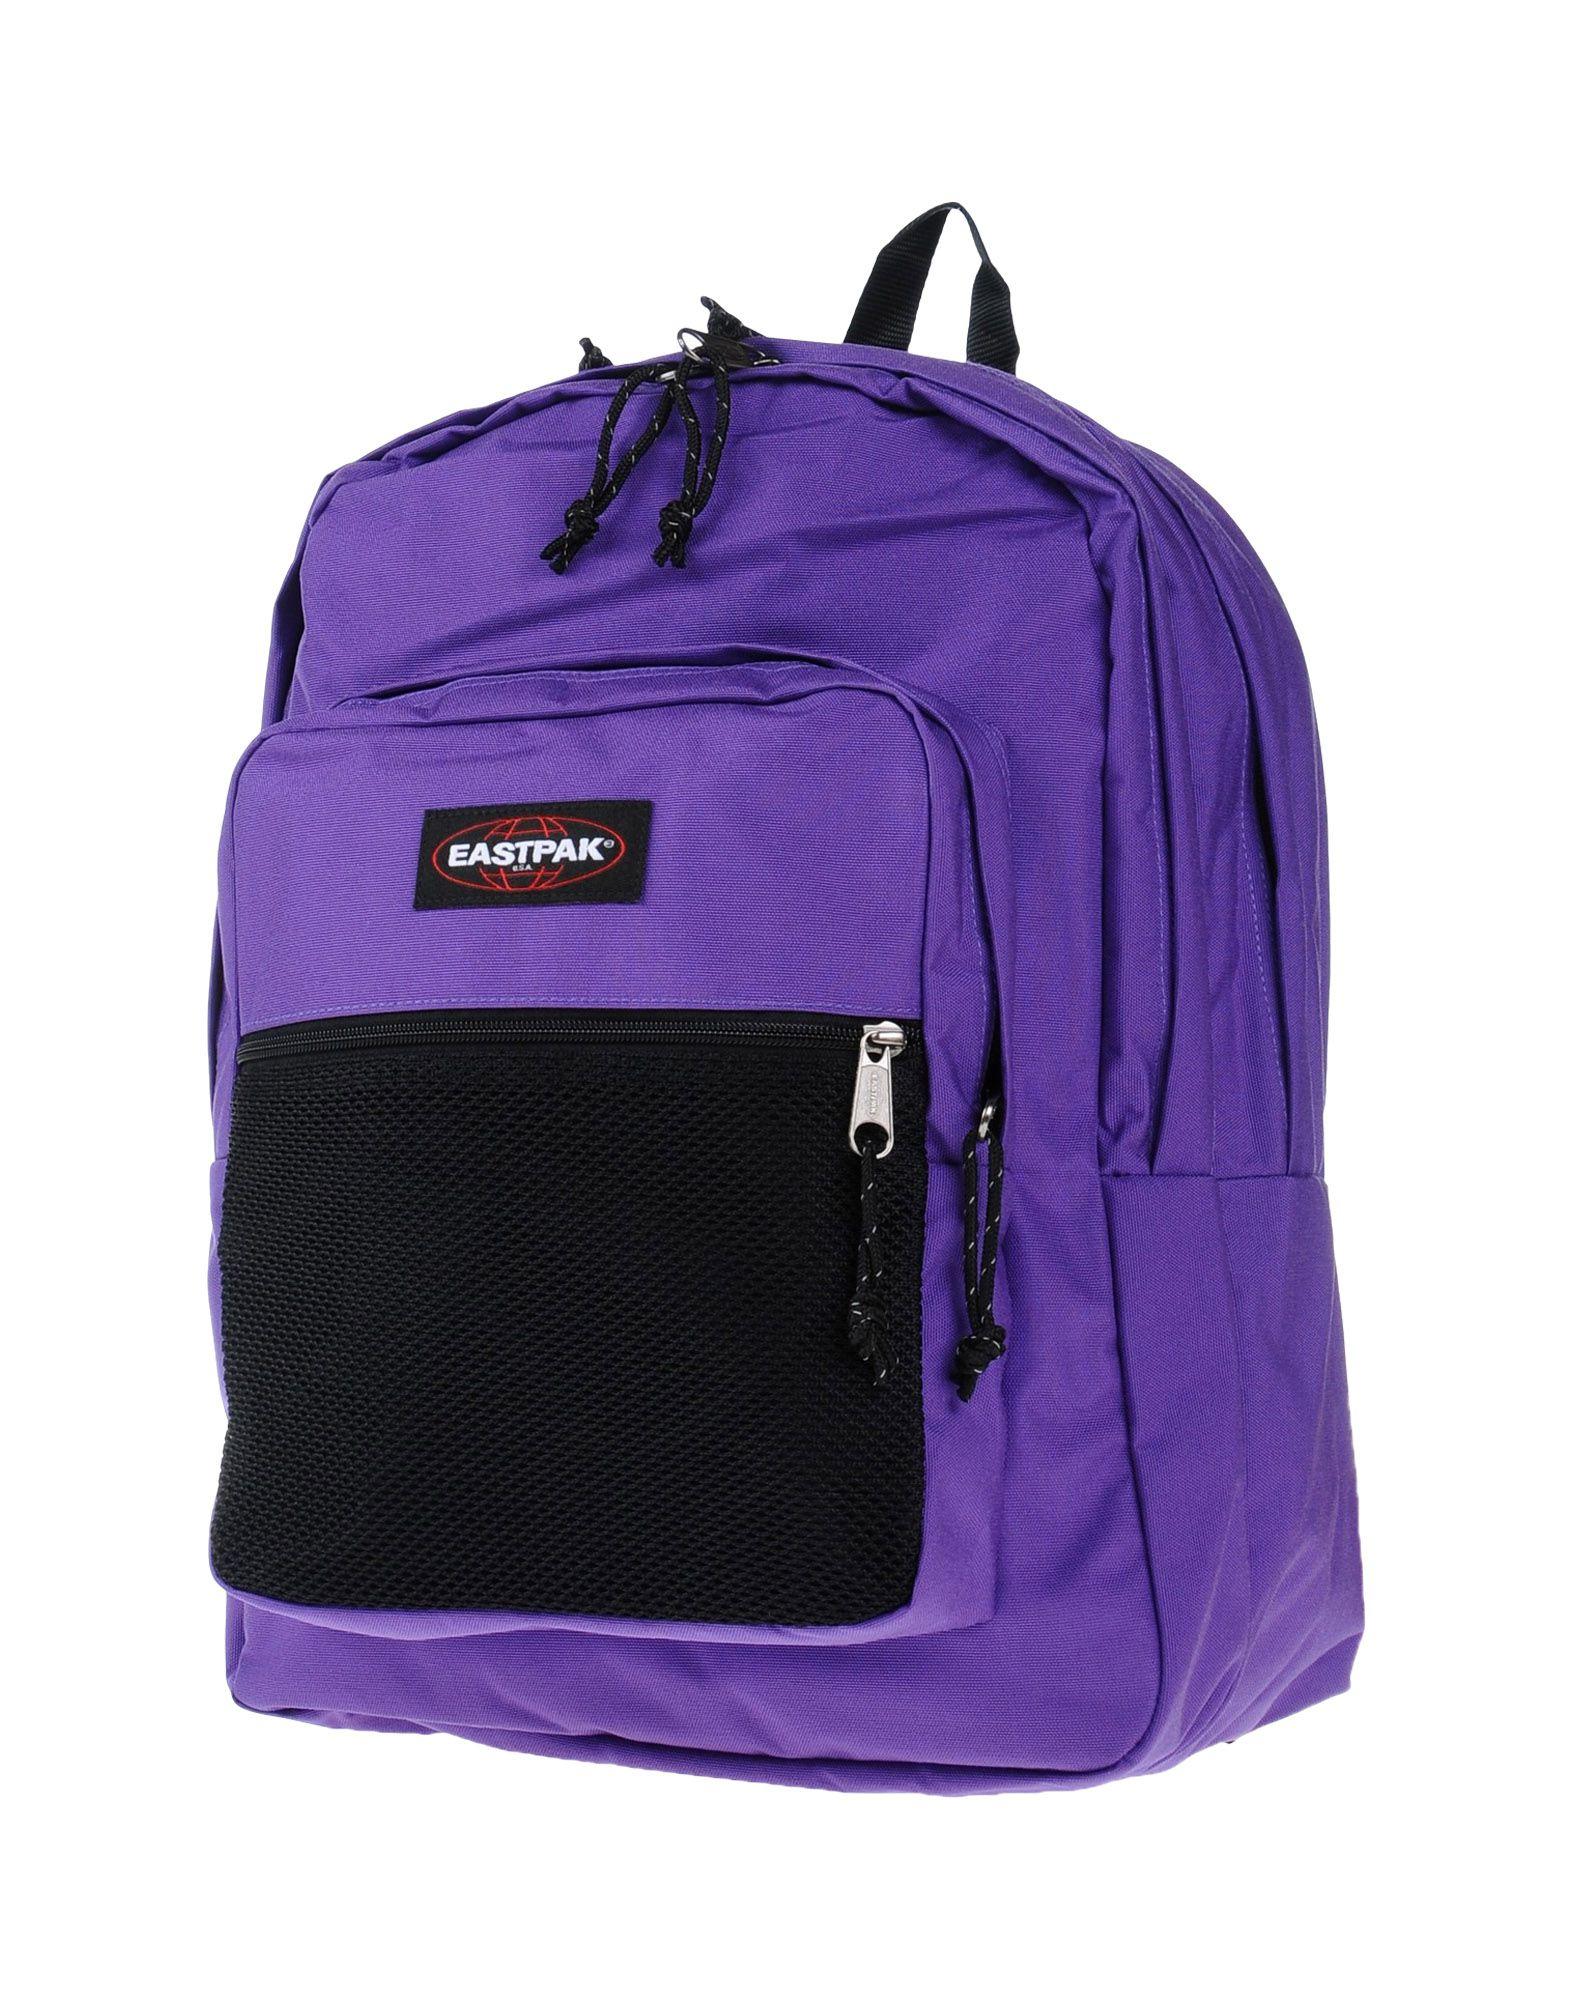 Eastpak Backpacks & Bum Bags in Purple for Men - Lyst